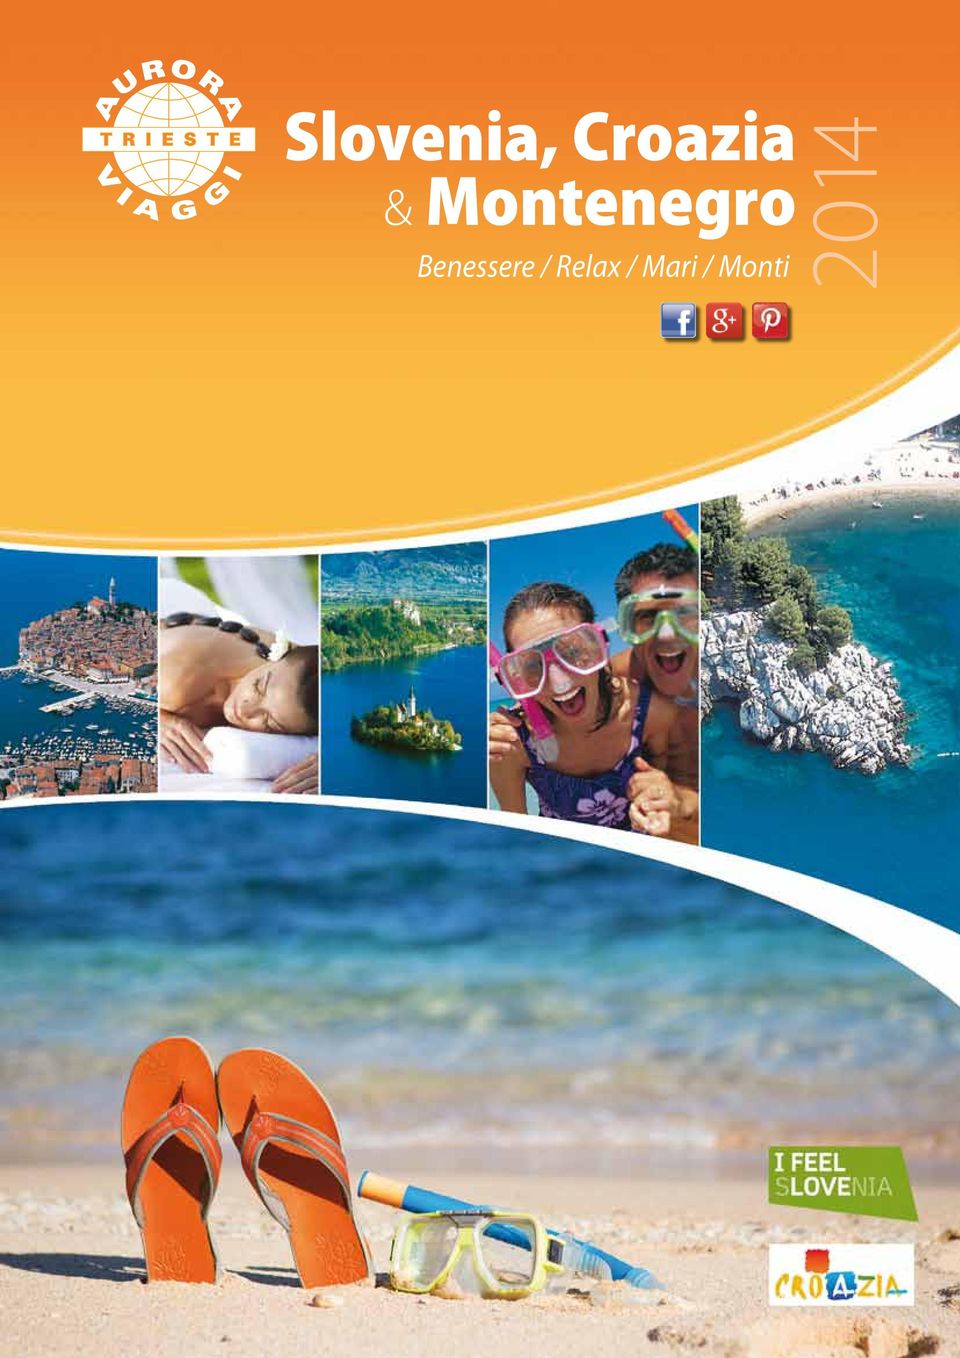 Montenegro Benessere / Relax / Mari